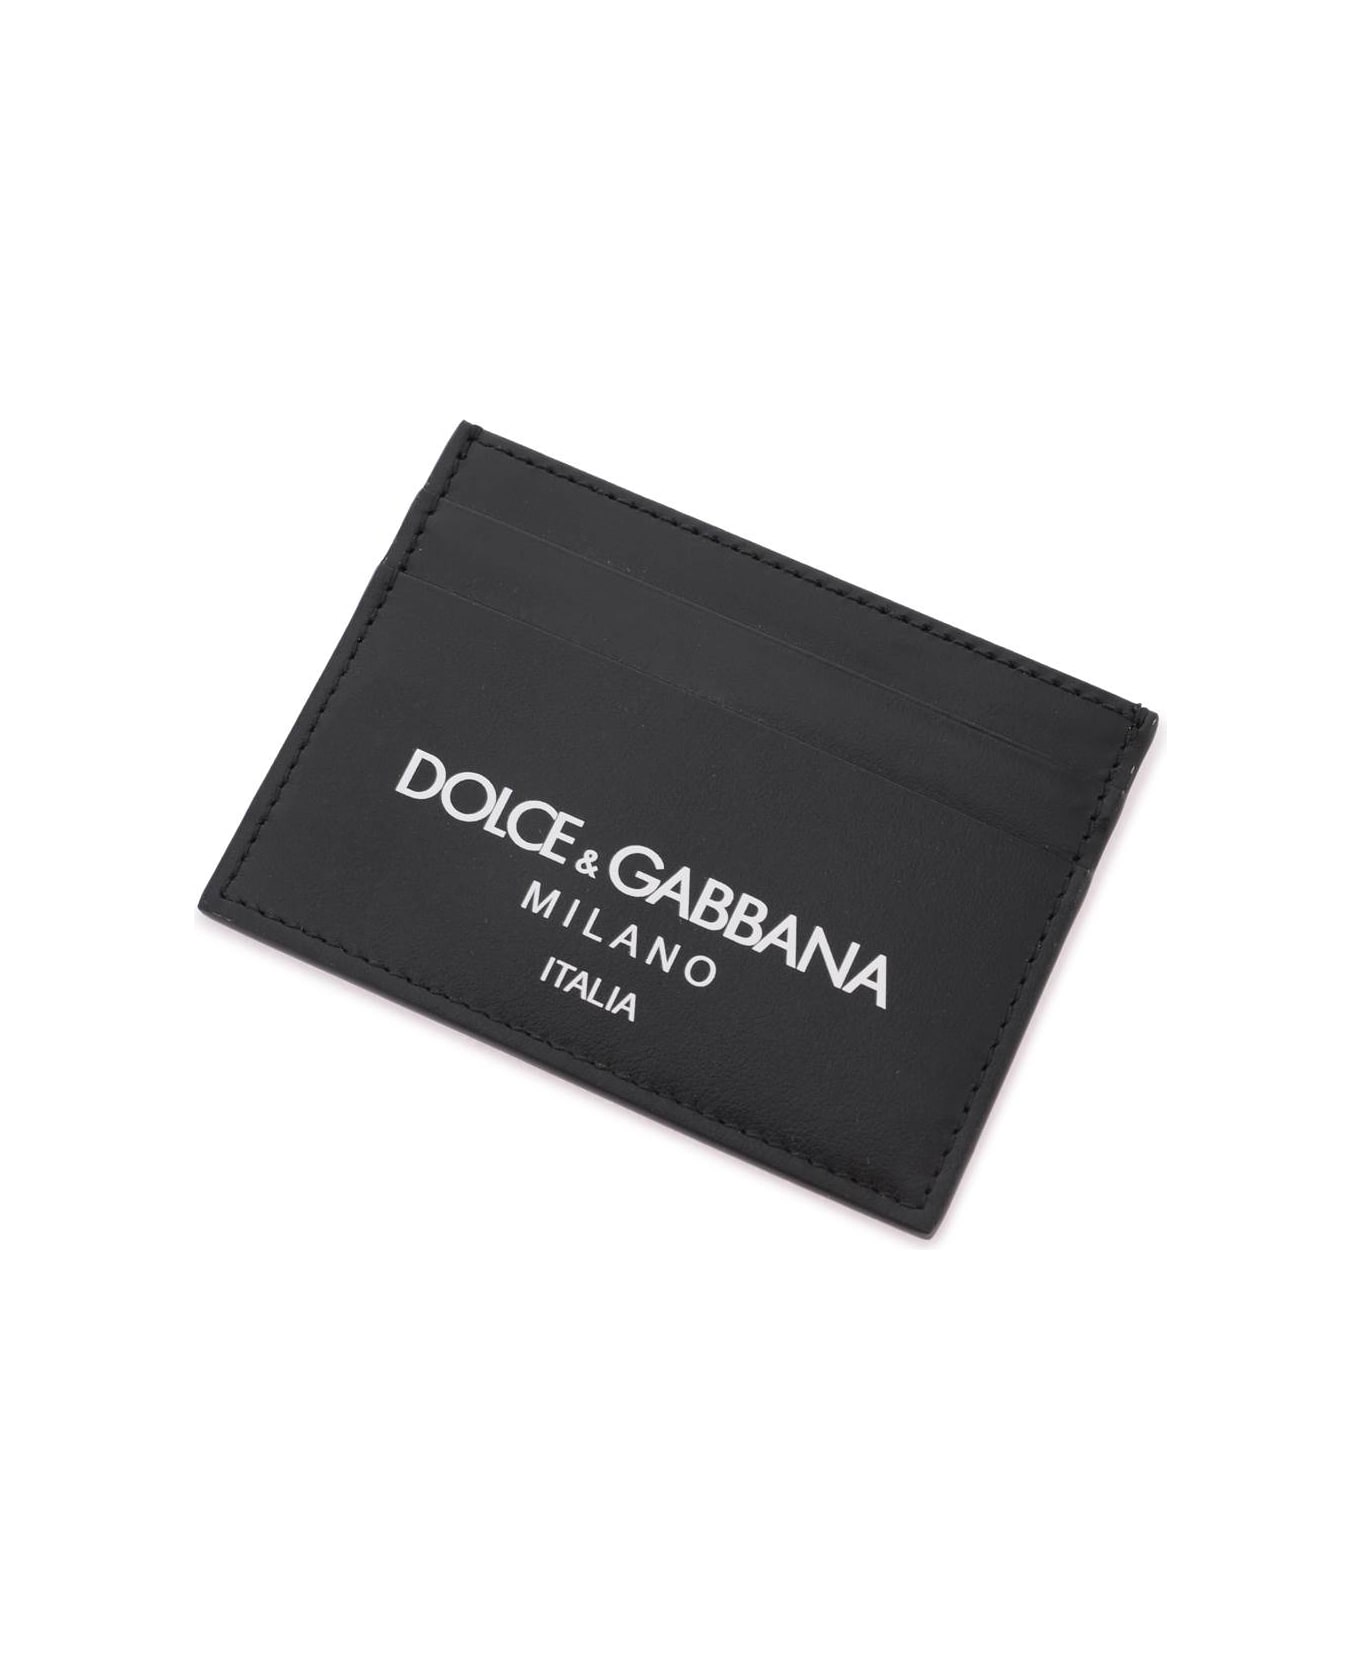 Dolce & Gabbana Leather Logo Cardholder - Print Dg Milano